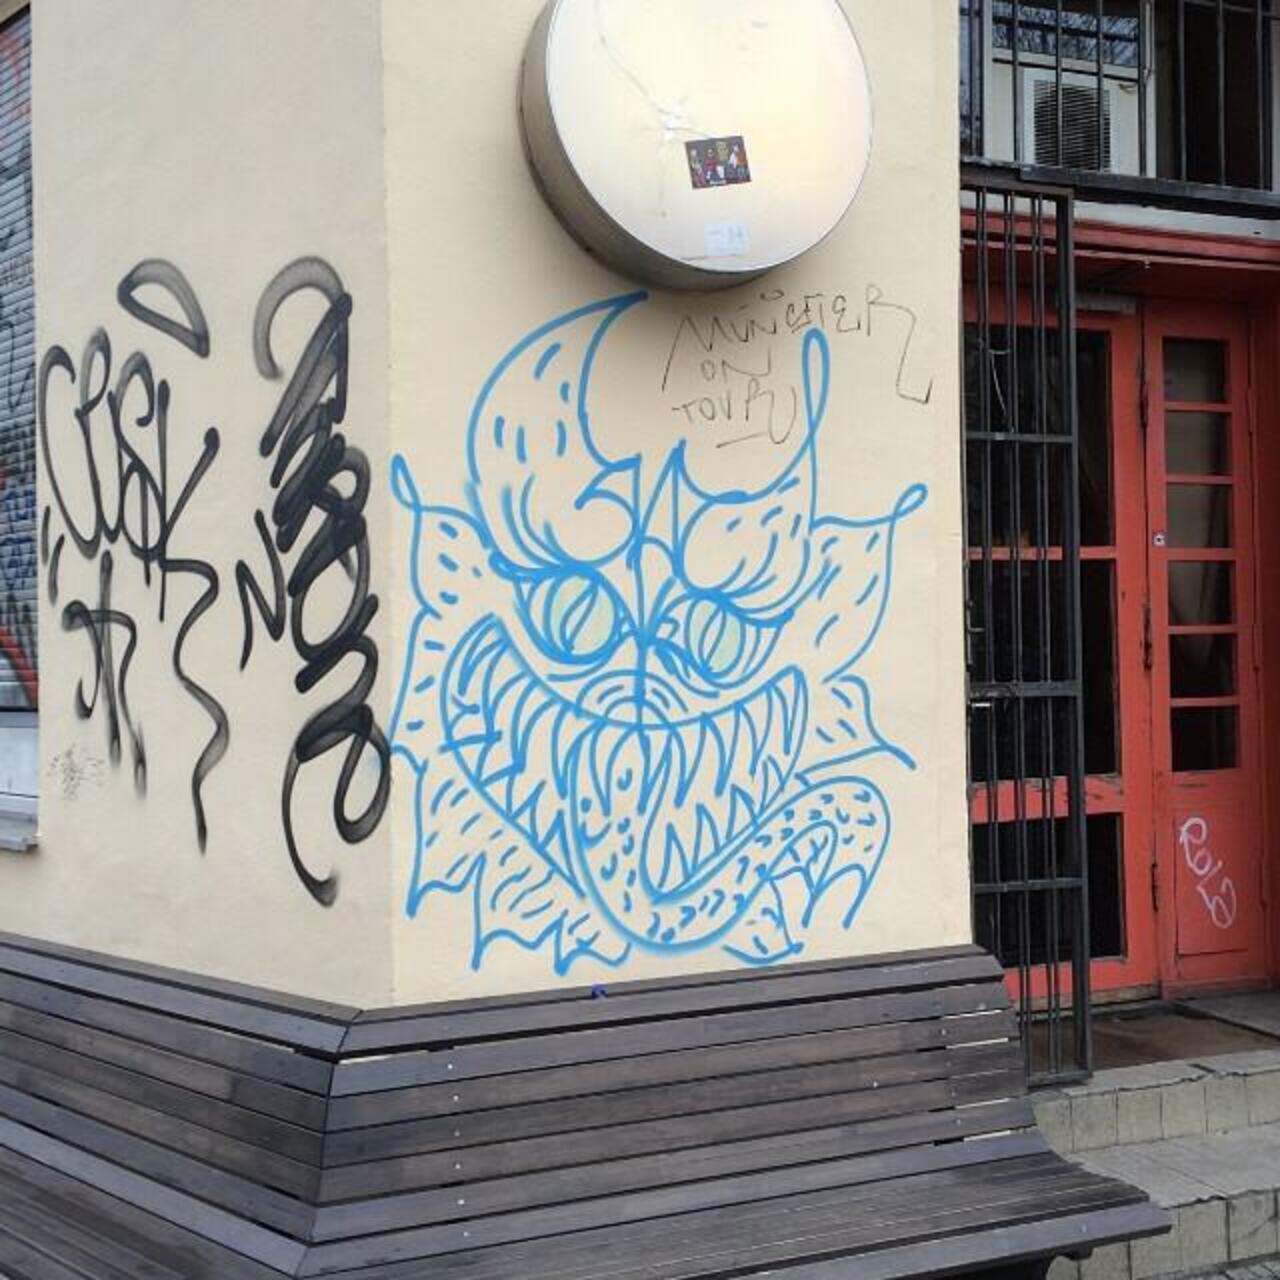 #Berlin #Allemagne #streetart #street #art #urbanart #urbantag #graffiti #streetartberlin by becombegeek http://t.co/fwKBGQokjp